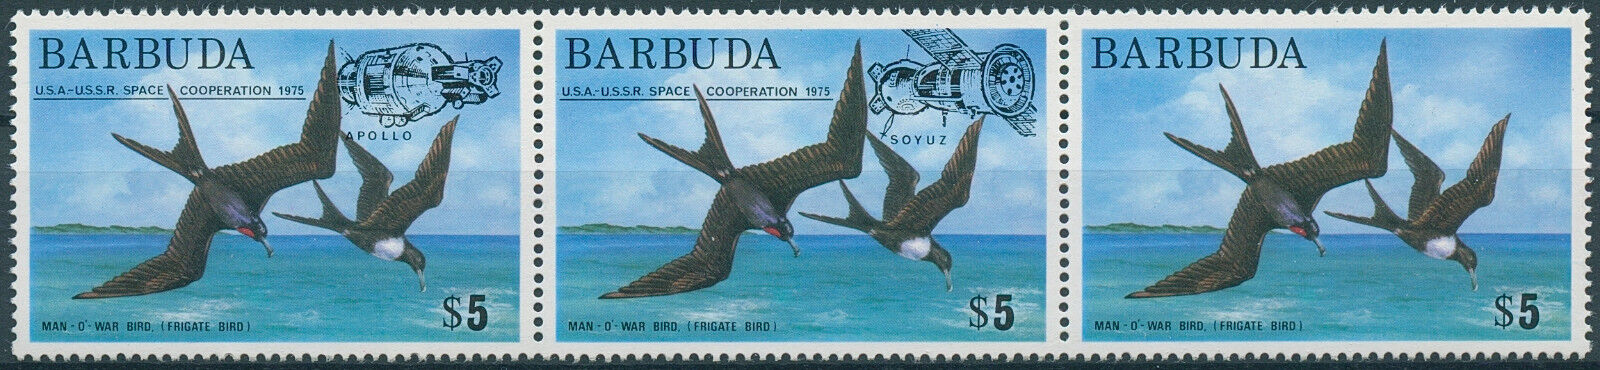 Barbuda 1975 MNH Birds on Stamps Frigatebird Apollo Soyuz OVPT Space 3v Set